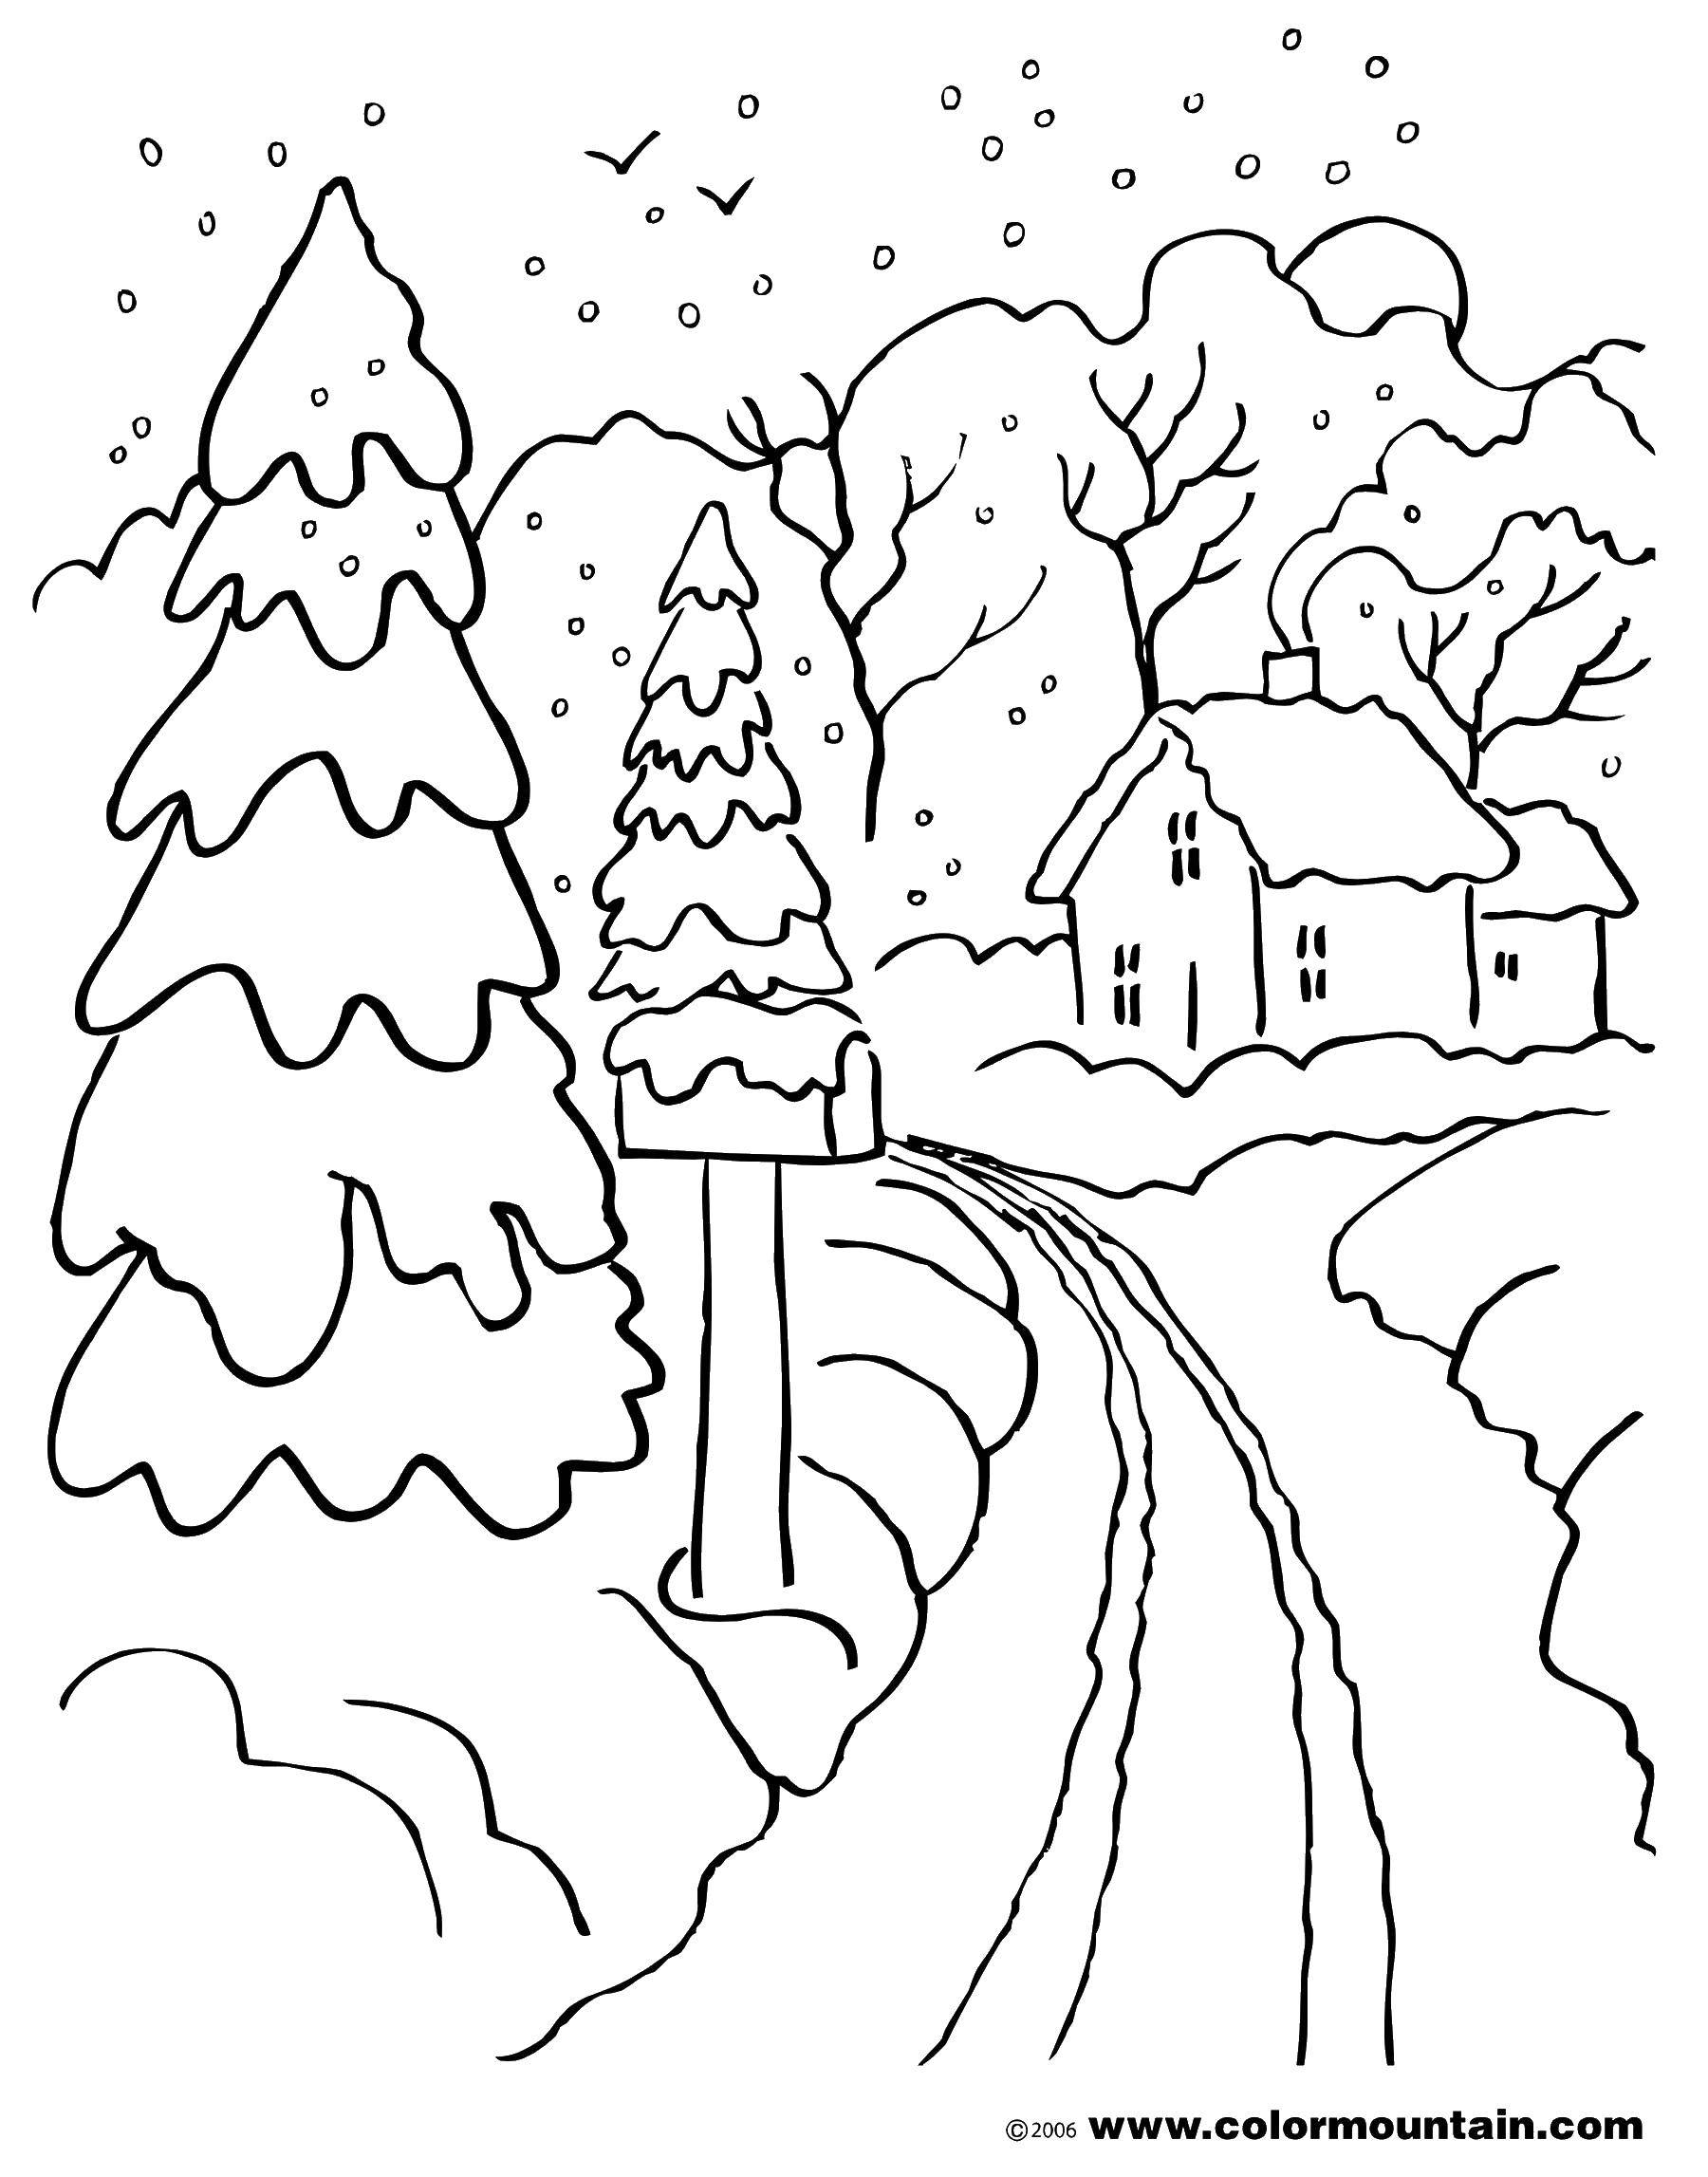 Coloring Snowfall. Category coloring. Tags:  snowfall, snow, houses.